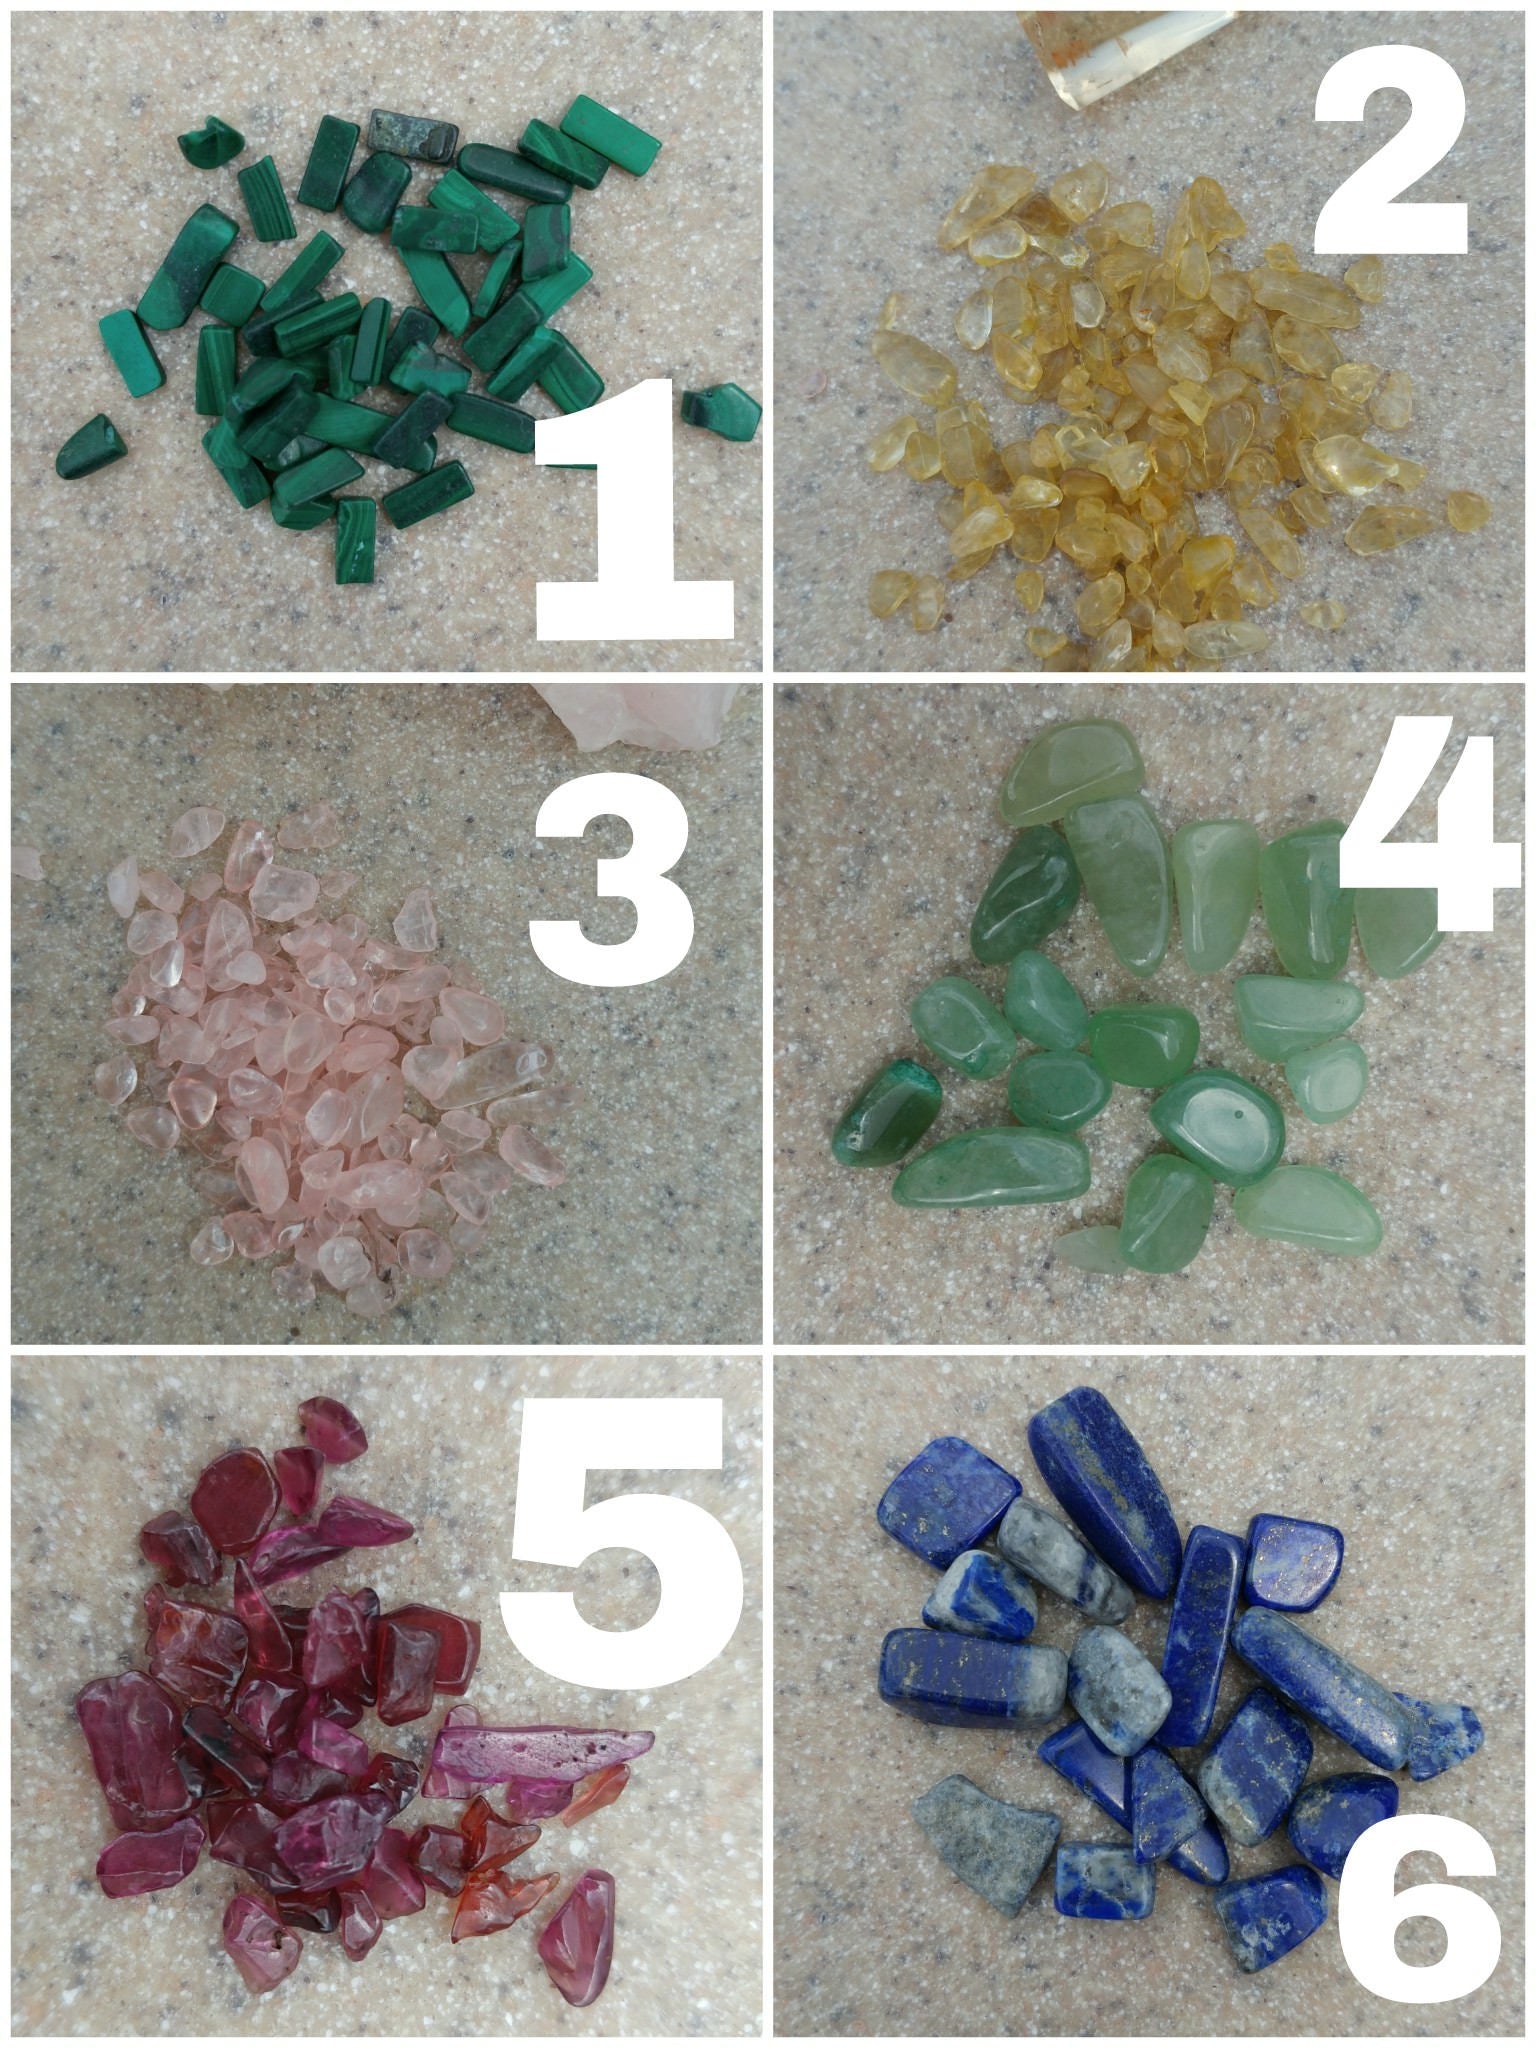 Gemstone roller bottle /Clear /Frosted /Gold lid /Rose Quartz /Green Aventurine /Garnet /Malachite /Citrine /Lapis Lazuli / Crystal roll on